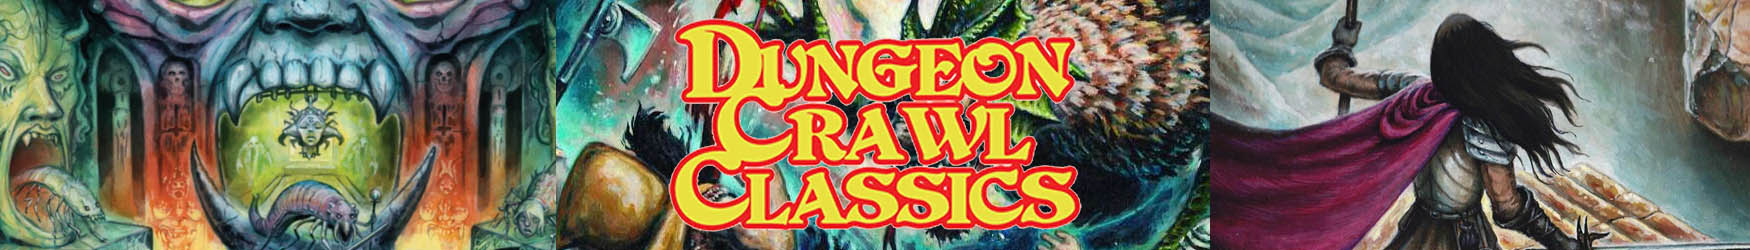 Dungeon Crawl Classics tag